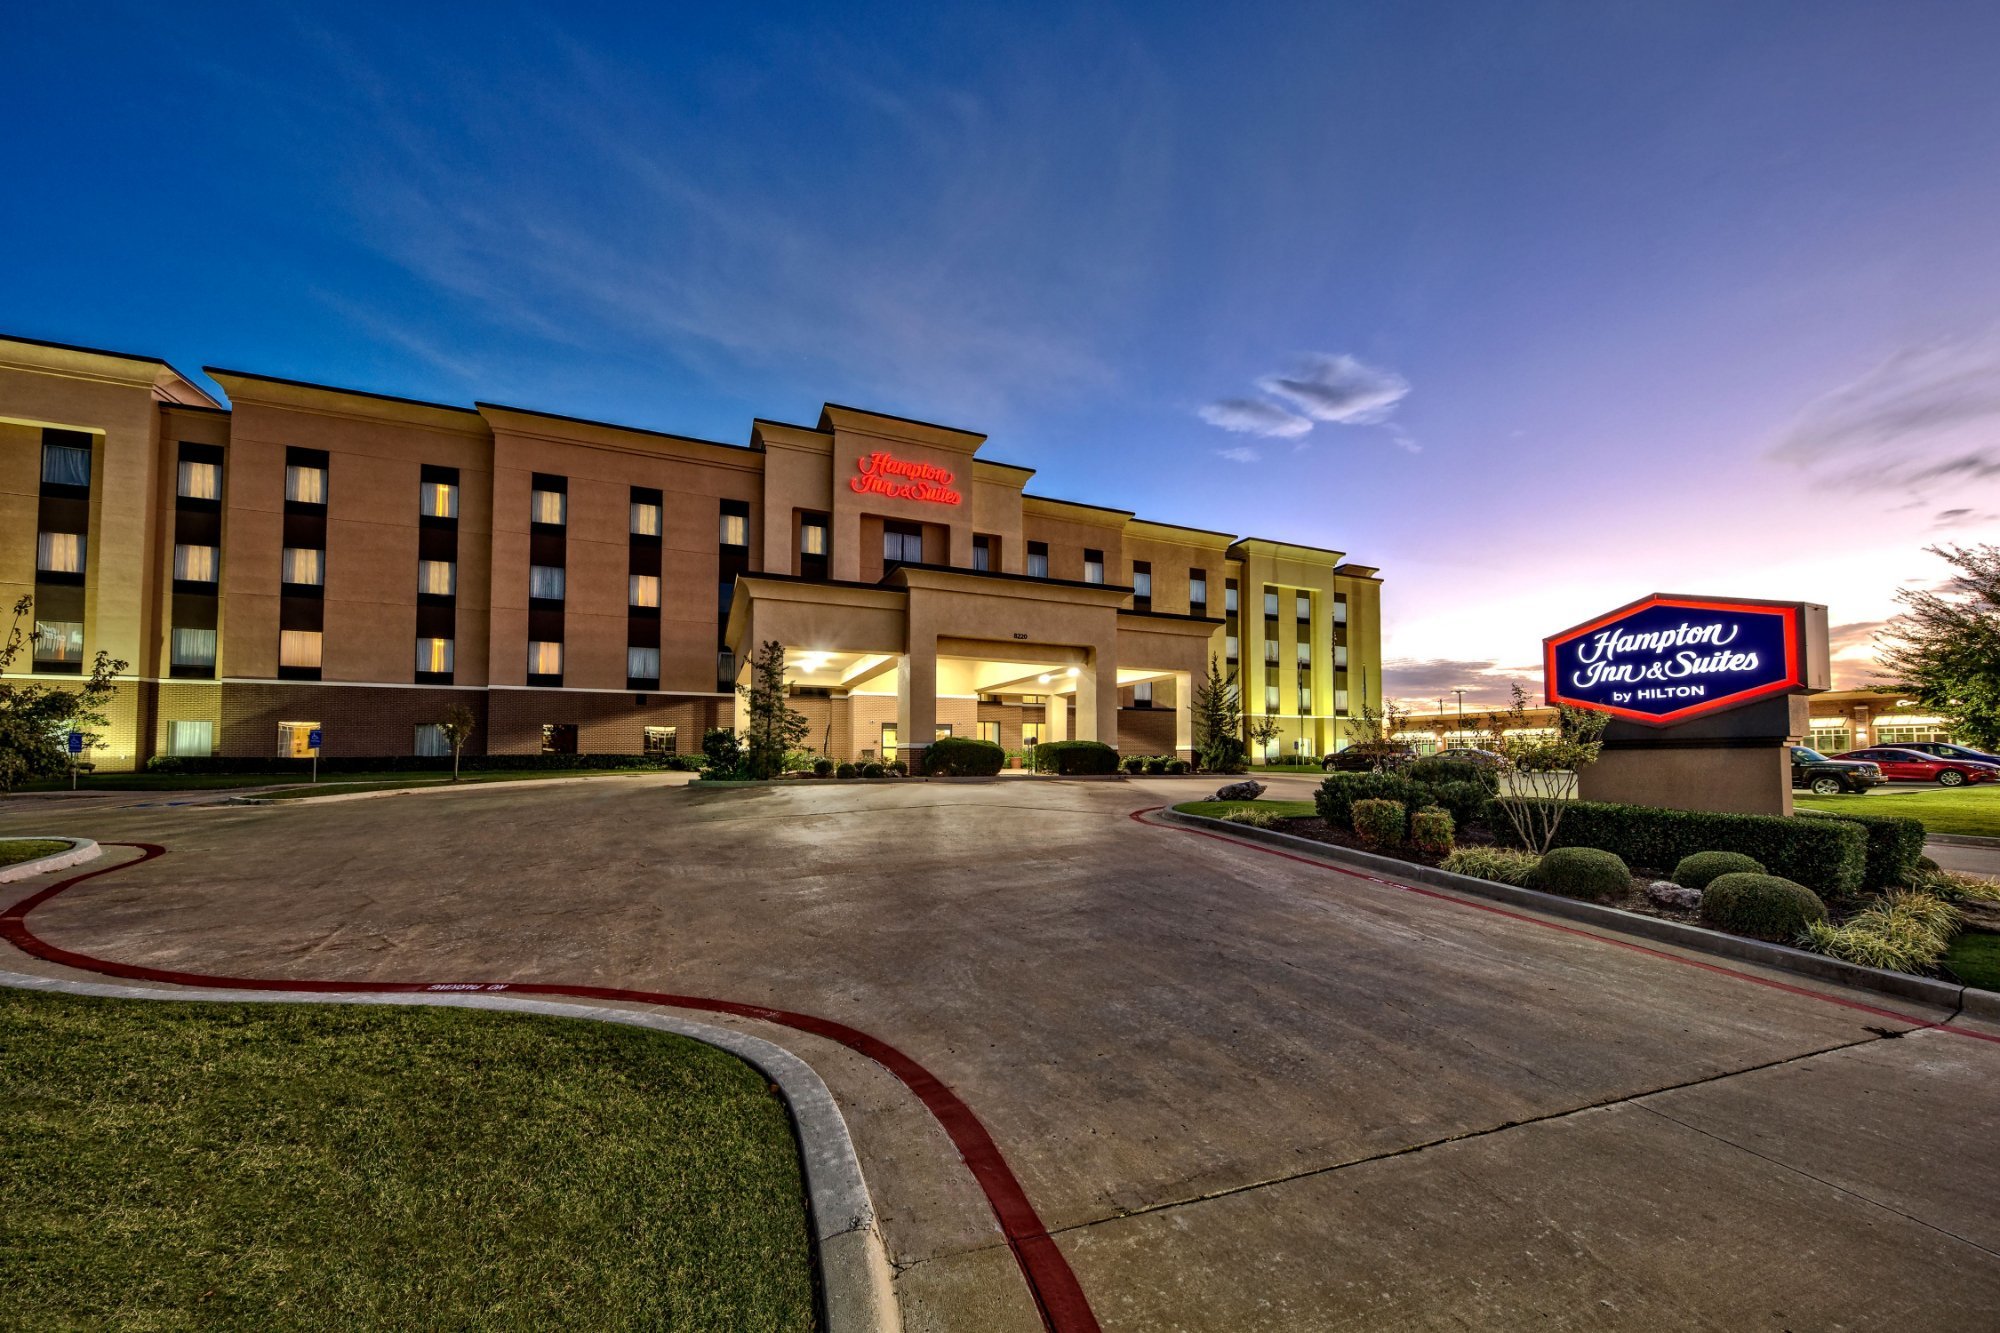 Photo of Hampton Inn & Suites Tulsa South-Bixby, Tulsa, OK